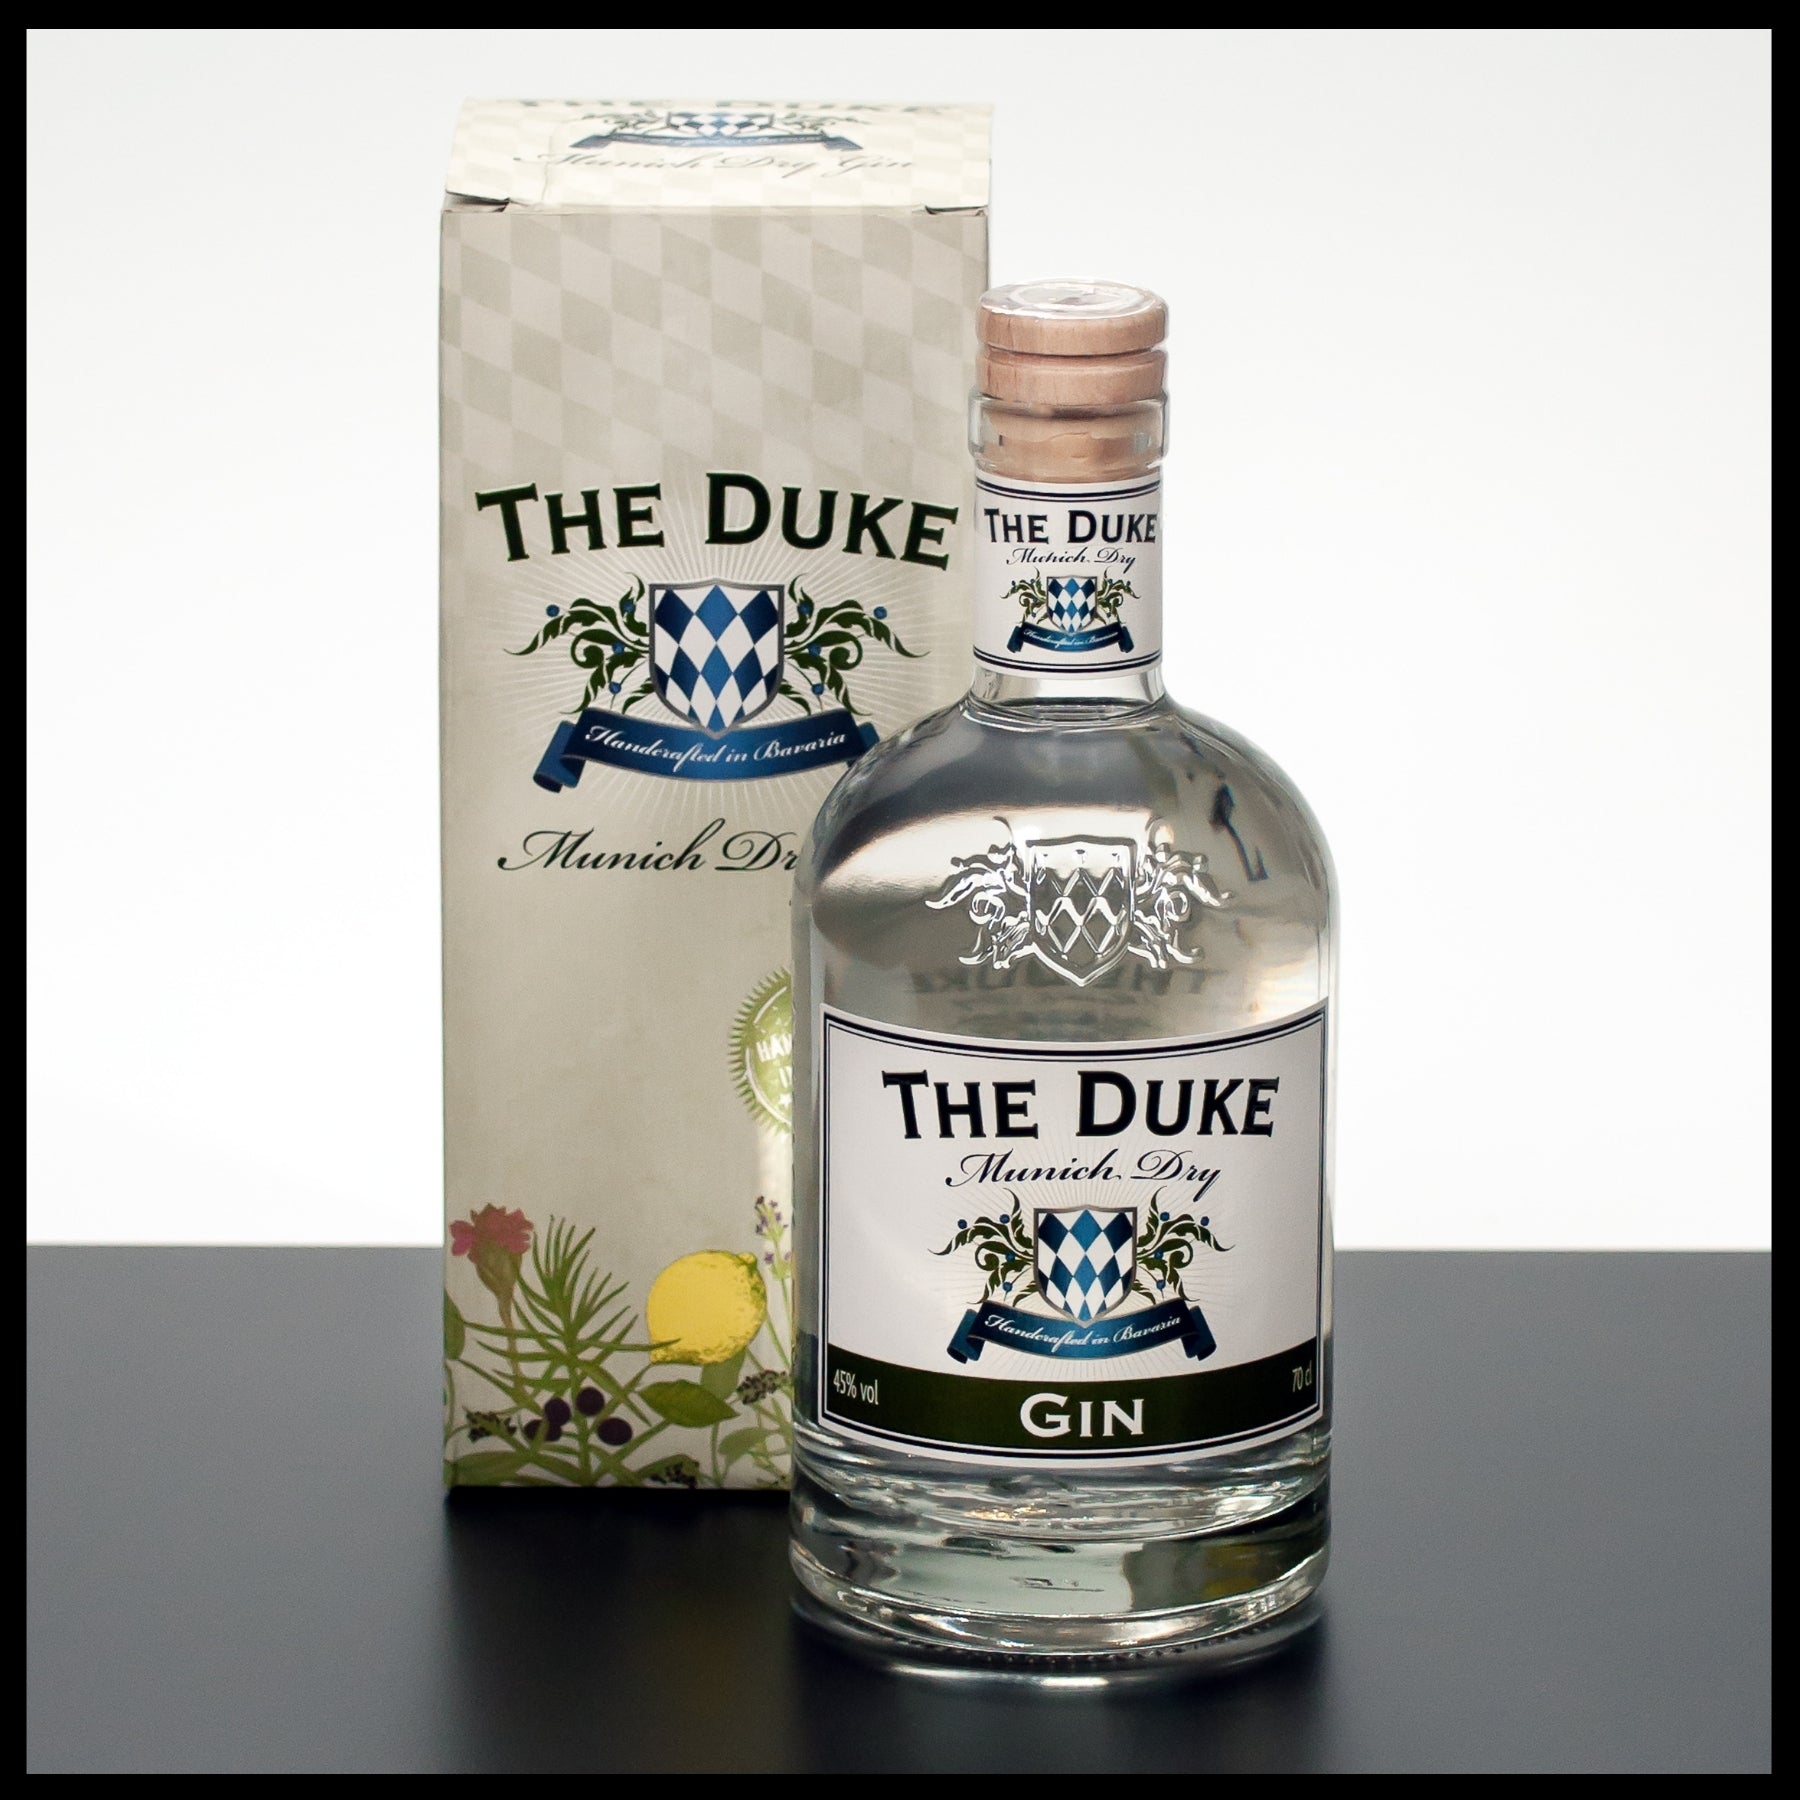 The Duke Munich Dry Gin 0,7L - 45% Vol. | Gin aus Bayern